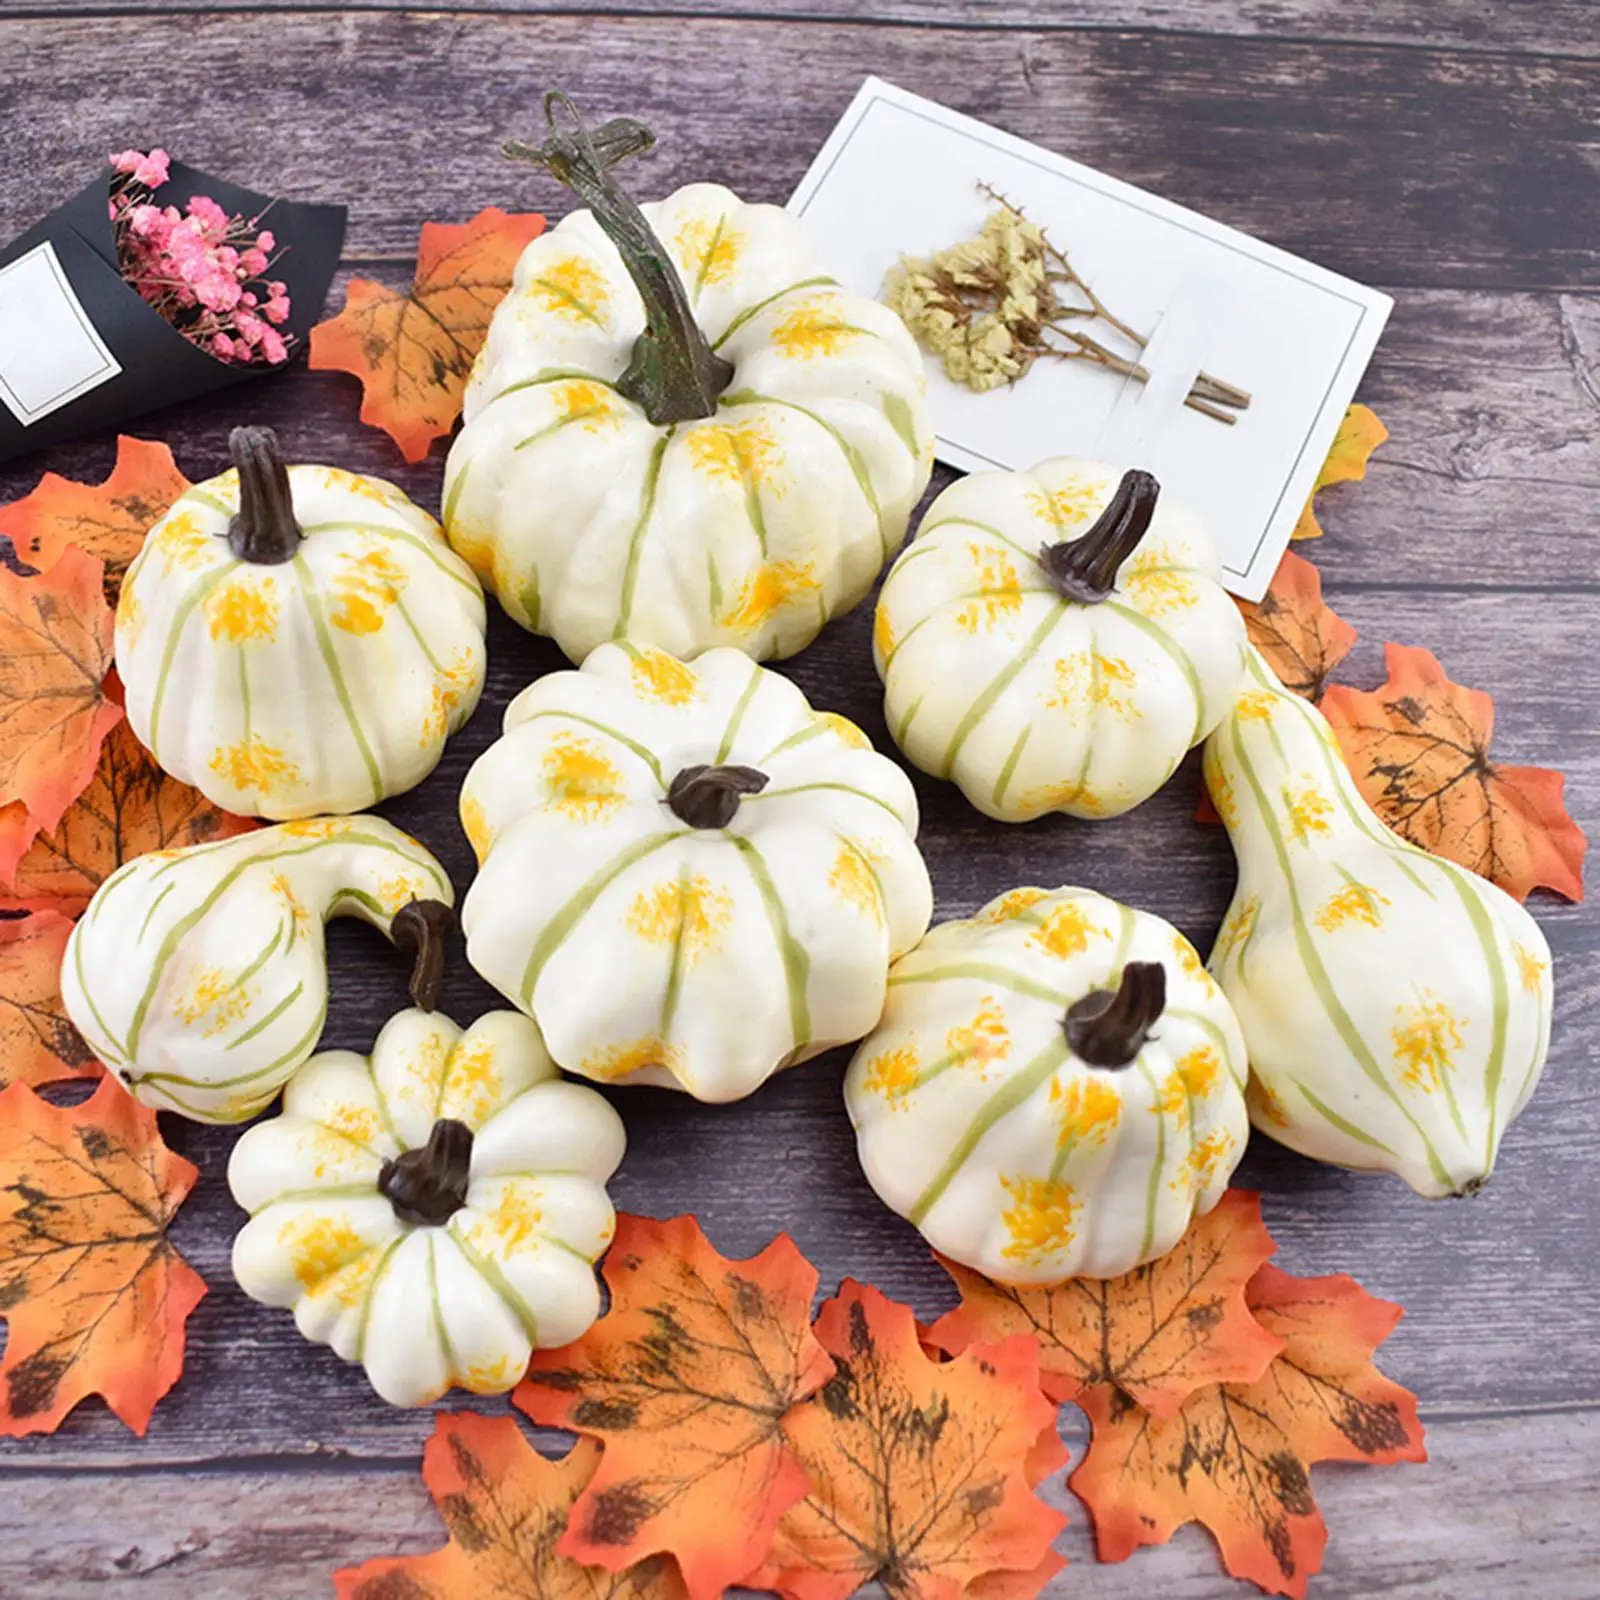 8x Artificial Pumpkin Decoration Photos Prop for Thanksgiving Decor Ornament